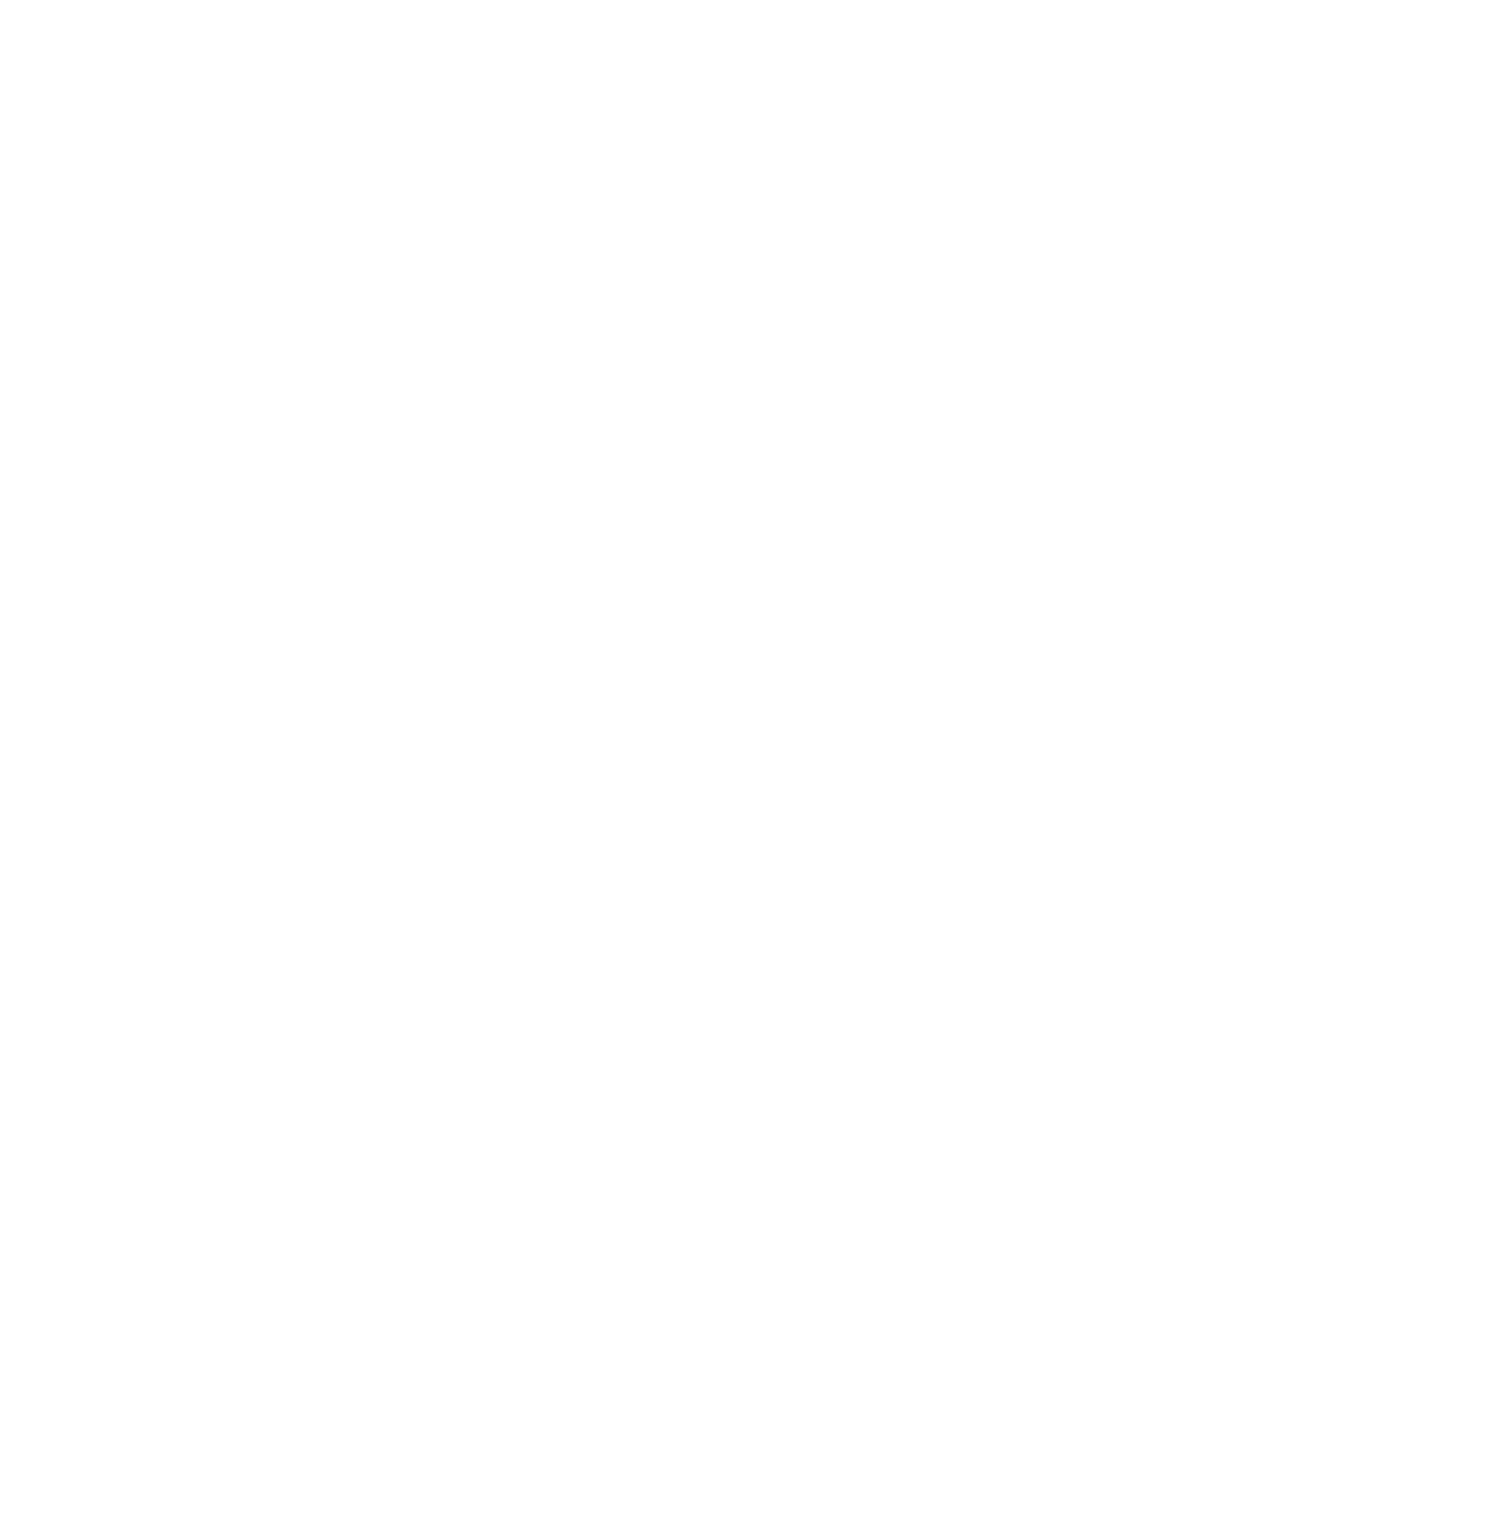 Scott B. Photography